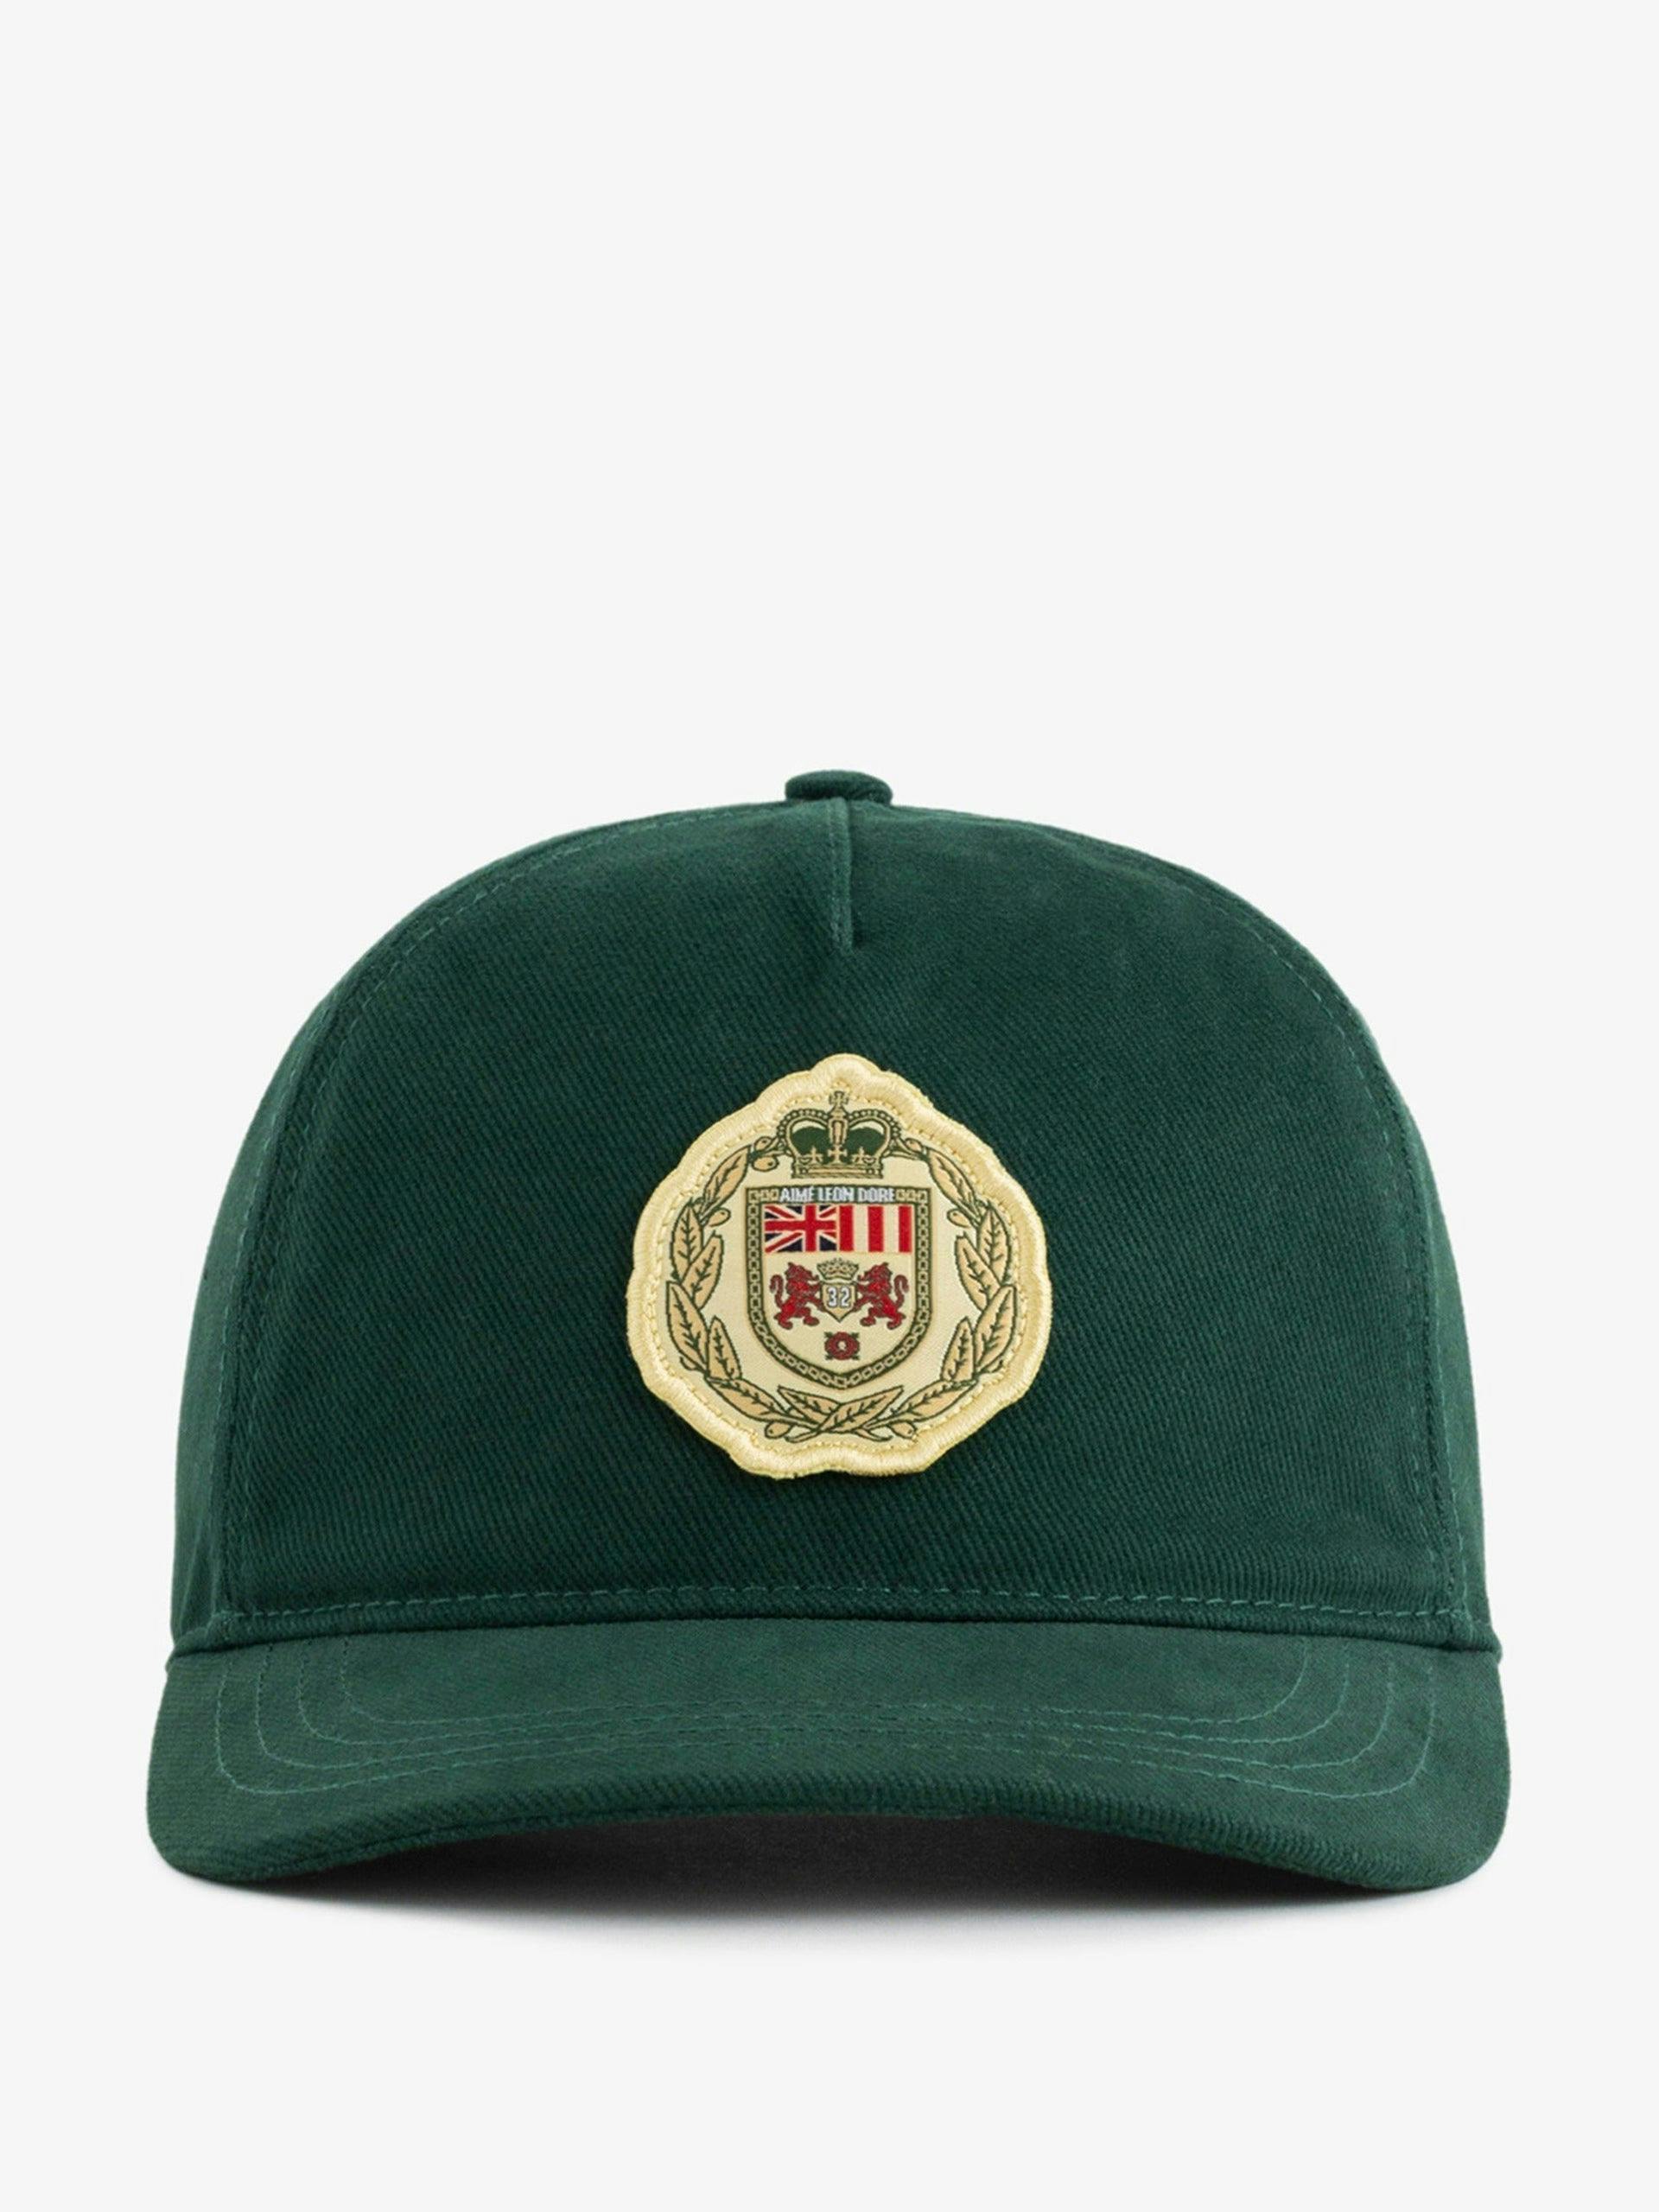 Green London club hat